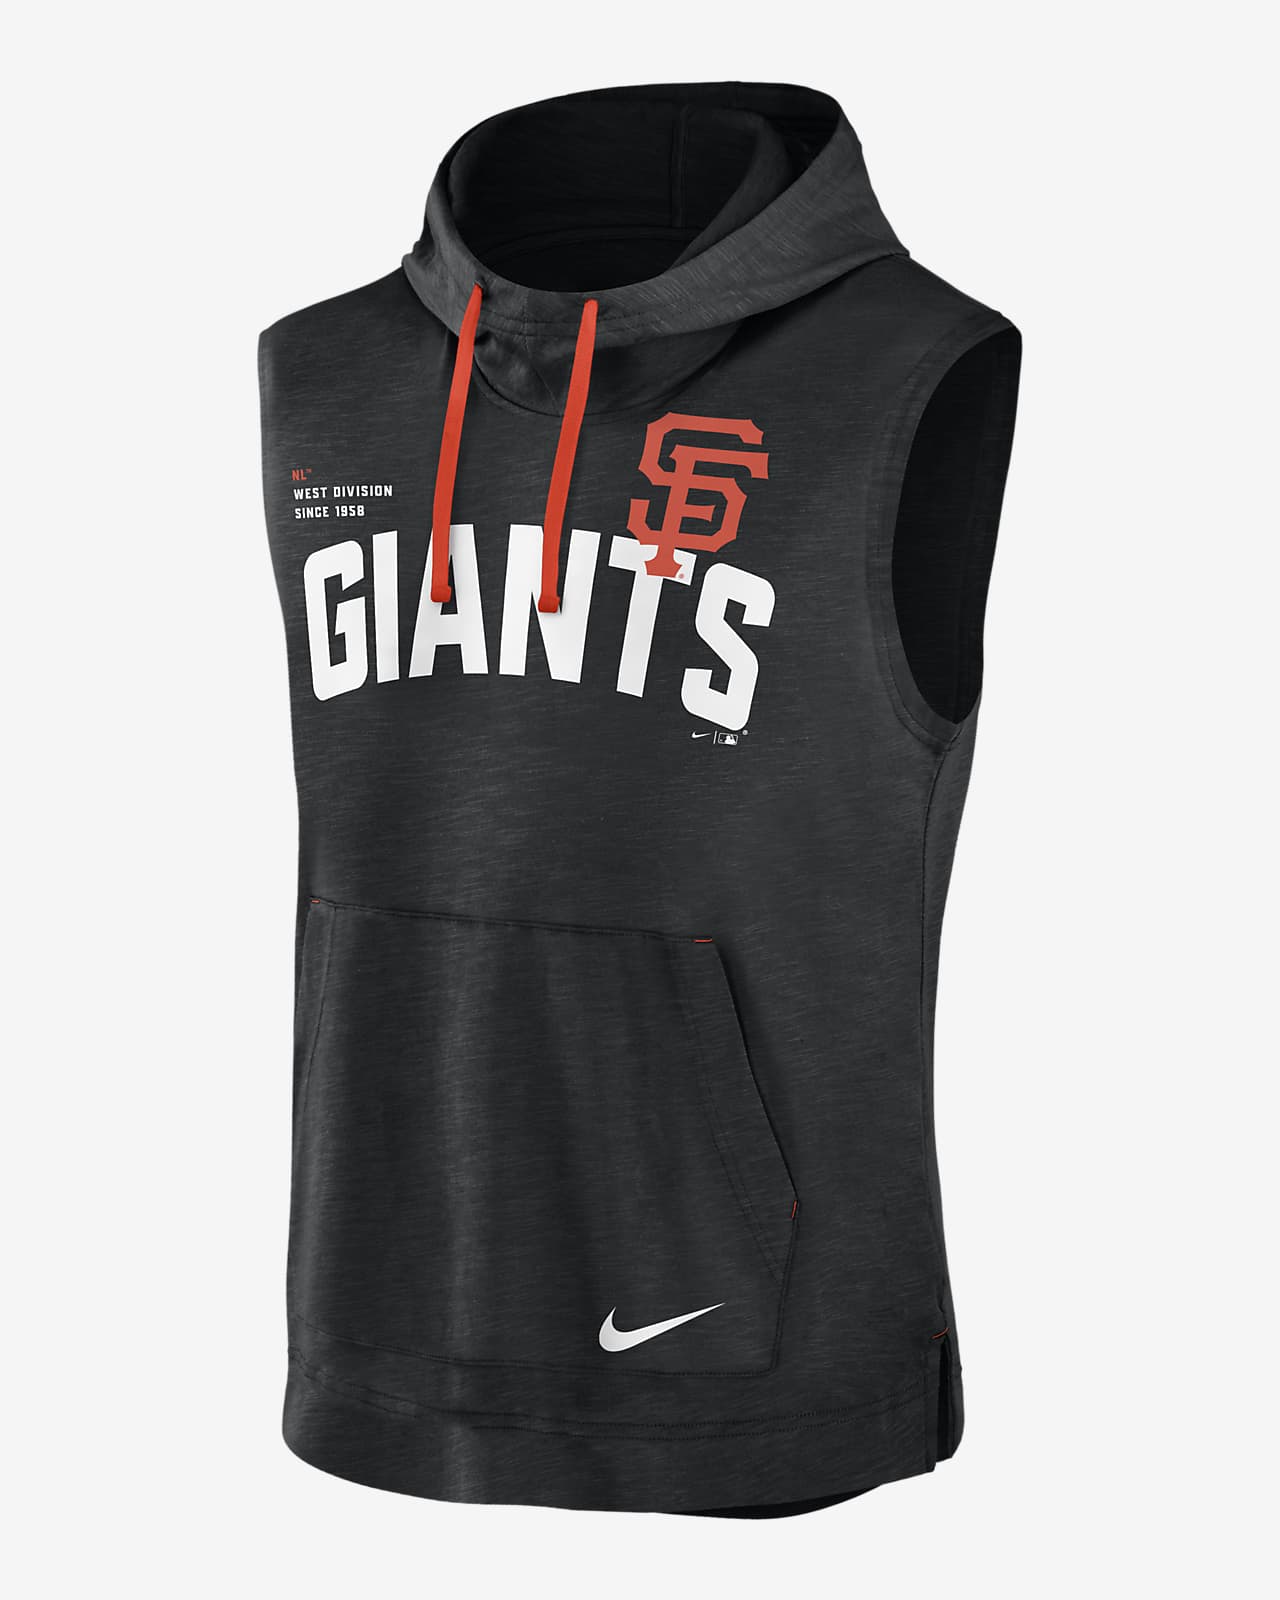 Nike Athletic (MLB San Francisco Giants) Men's Sleeveless Pullover Hoodie